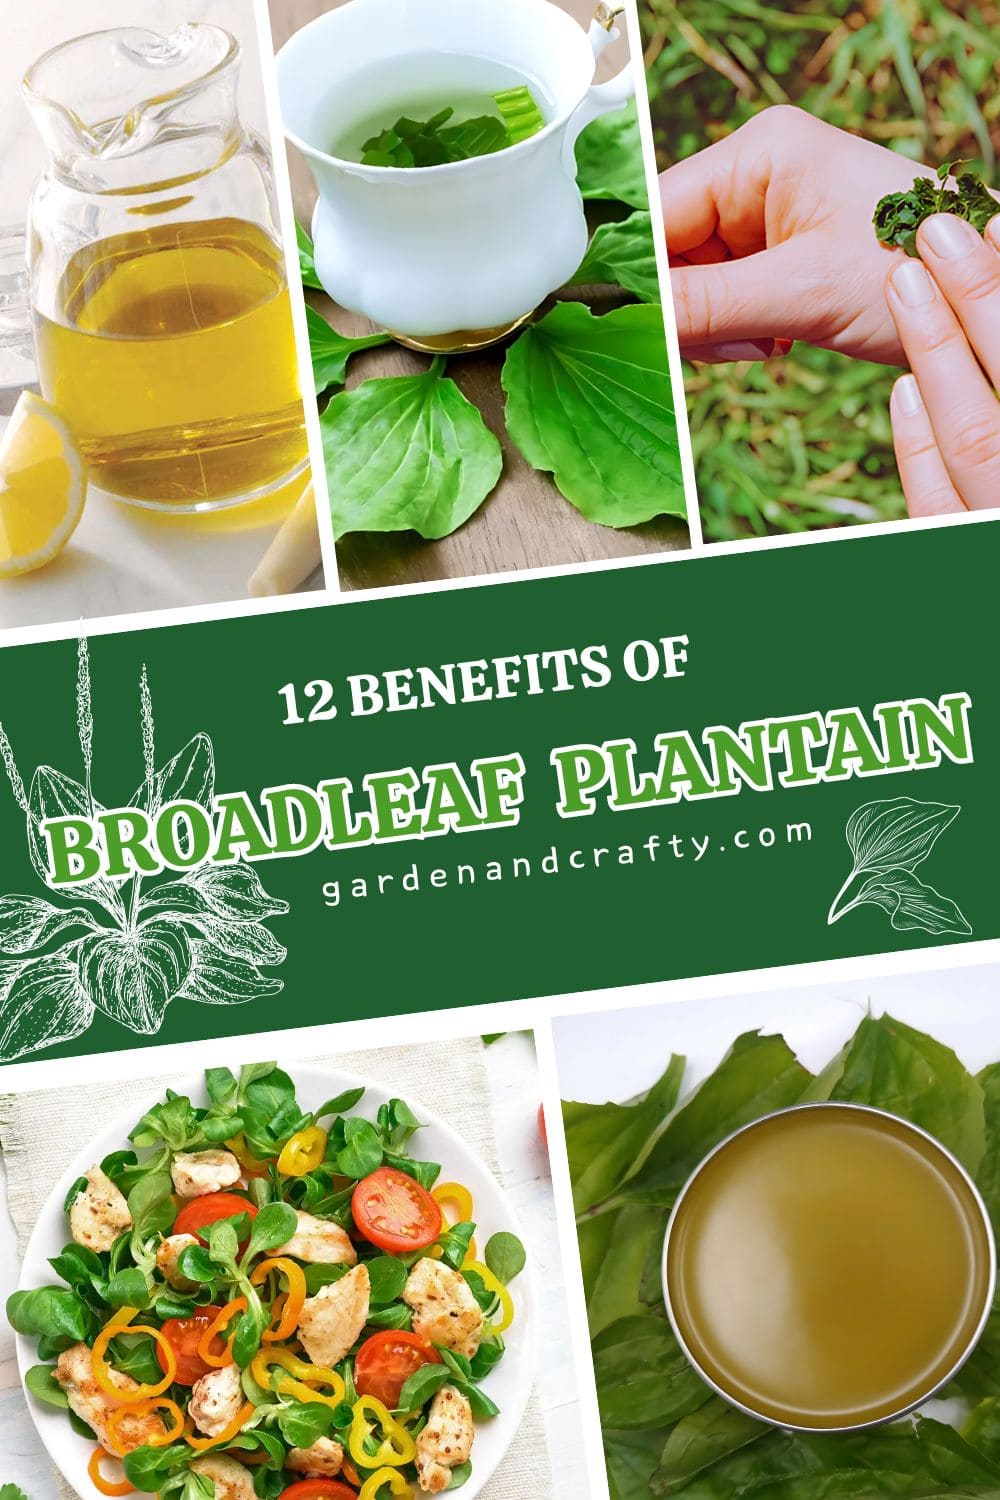 Benefits of Broadleaf Plantain